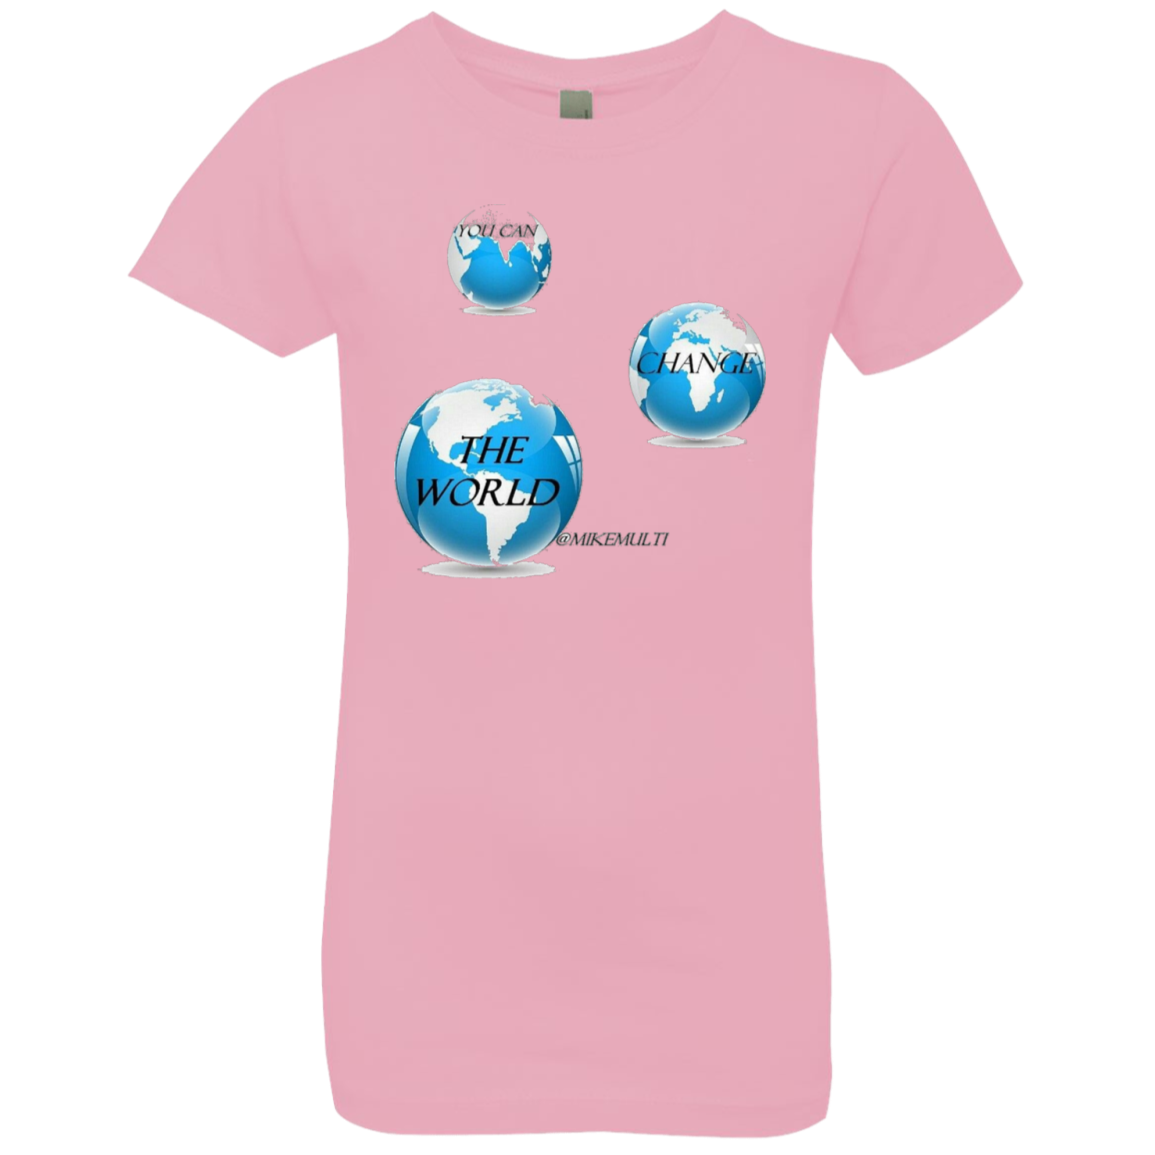 You Can Change The World - Girls' Princess T-Shirt CustomCat